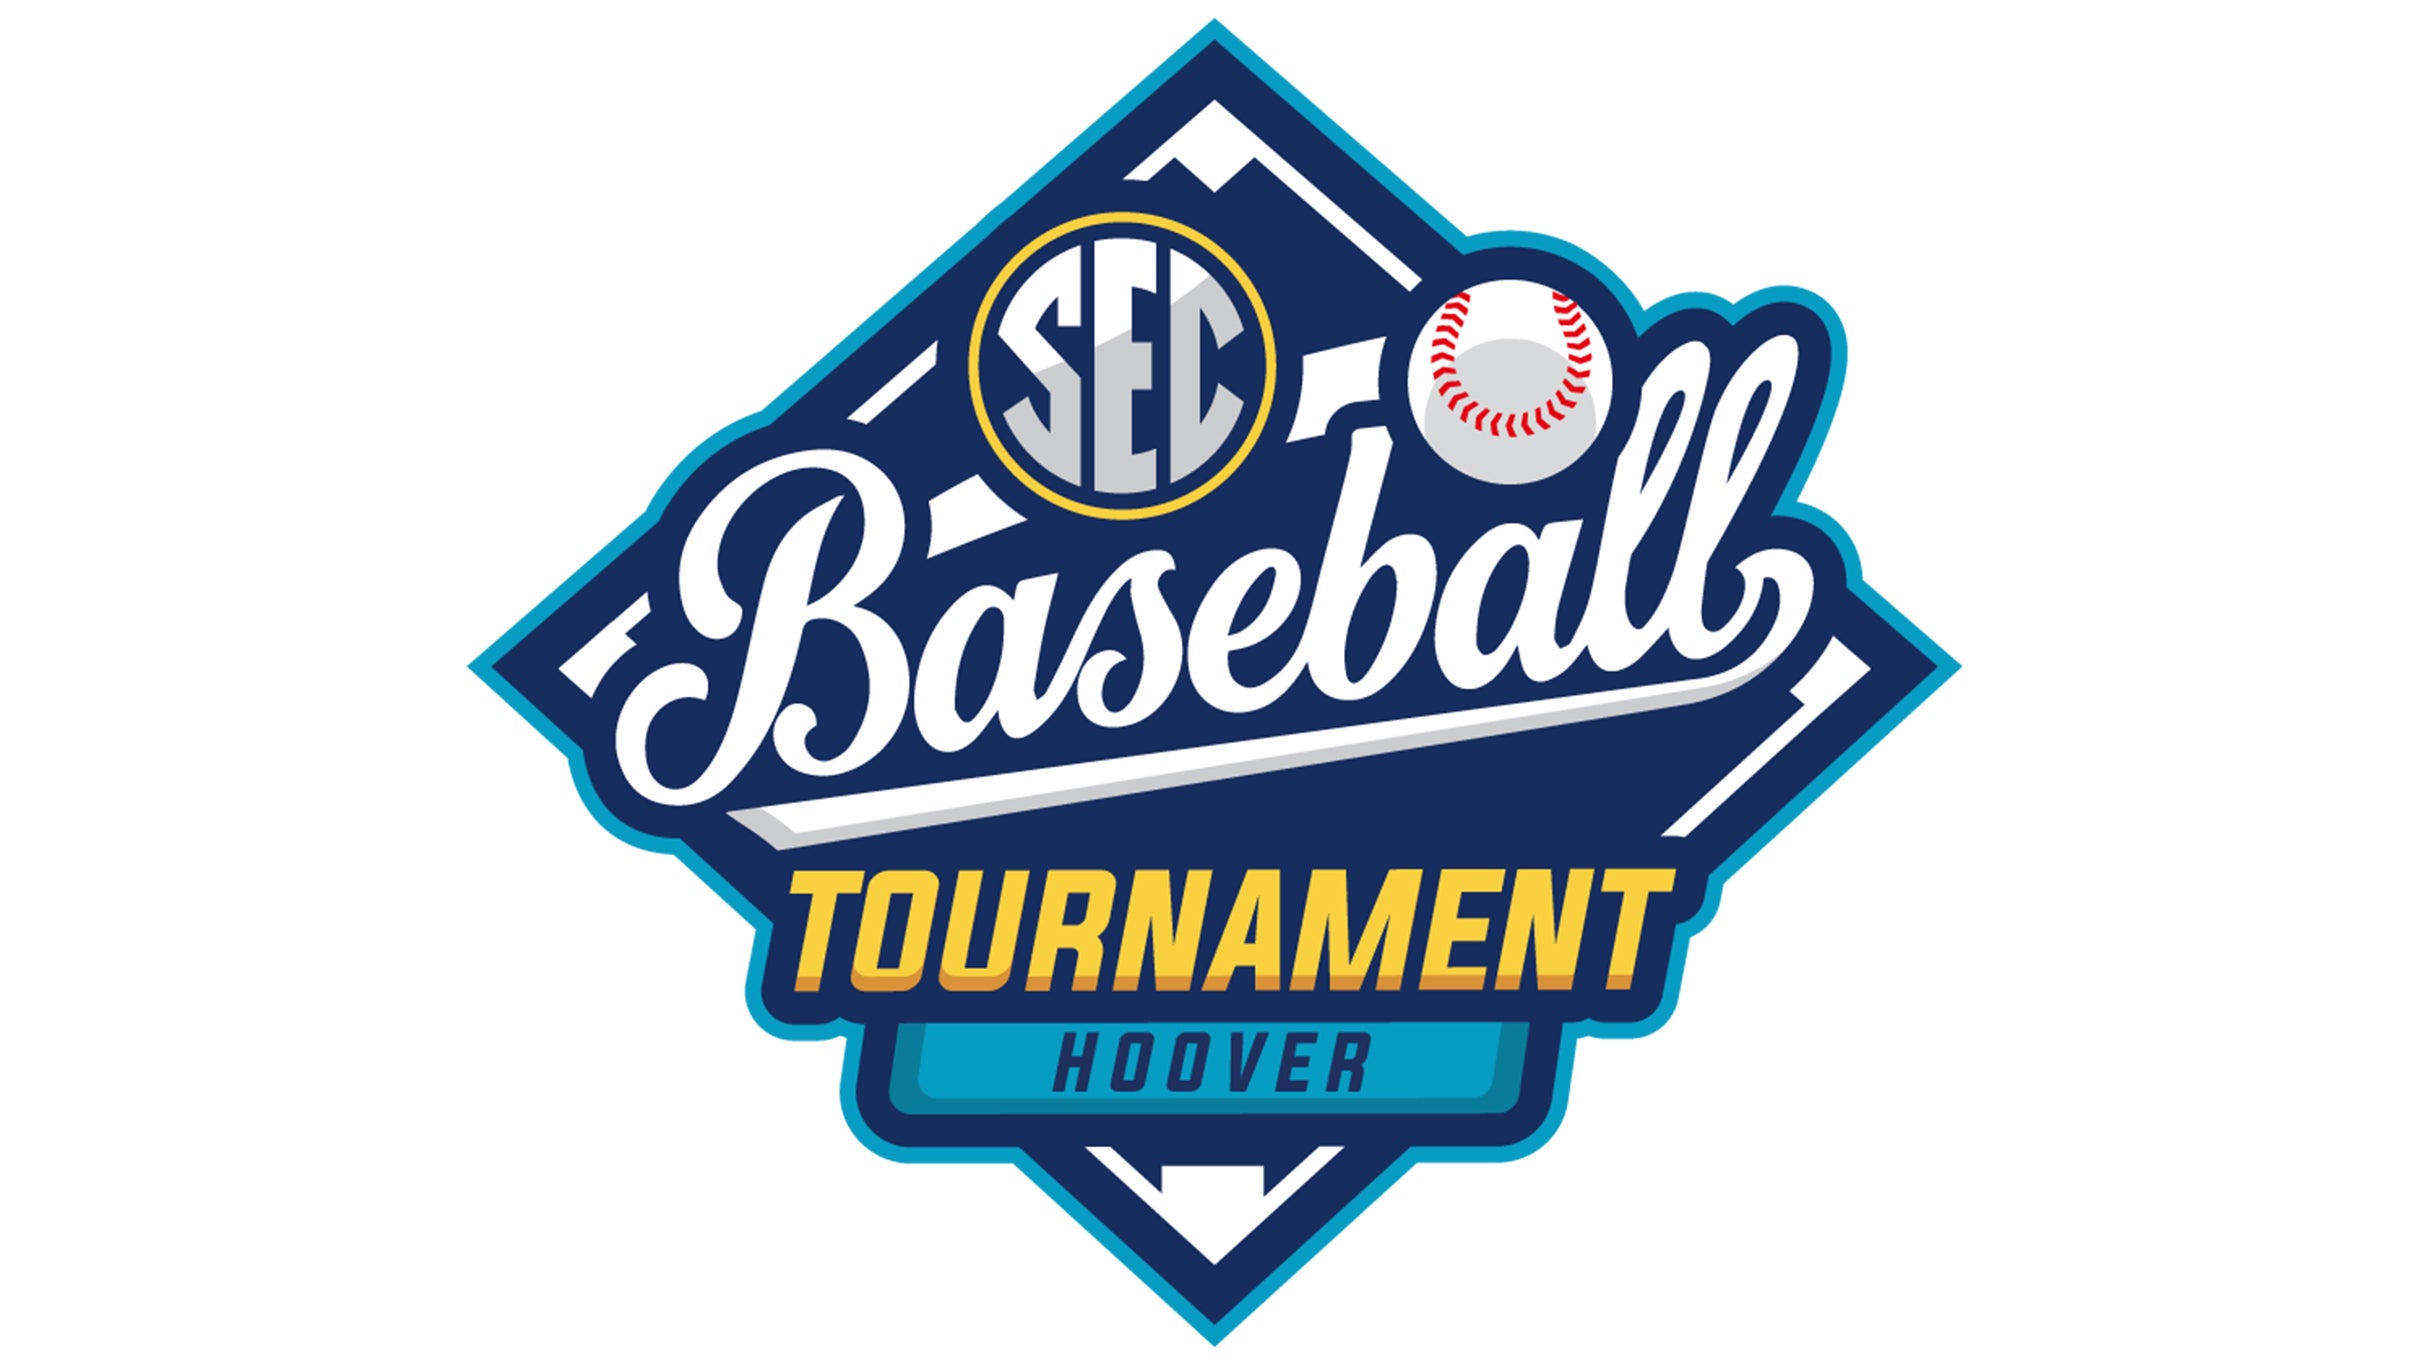 SEC Baseball Tournament-Session 4 at Hoover Metropolitan Stadium – Hoover, AL